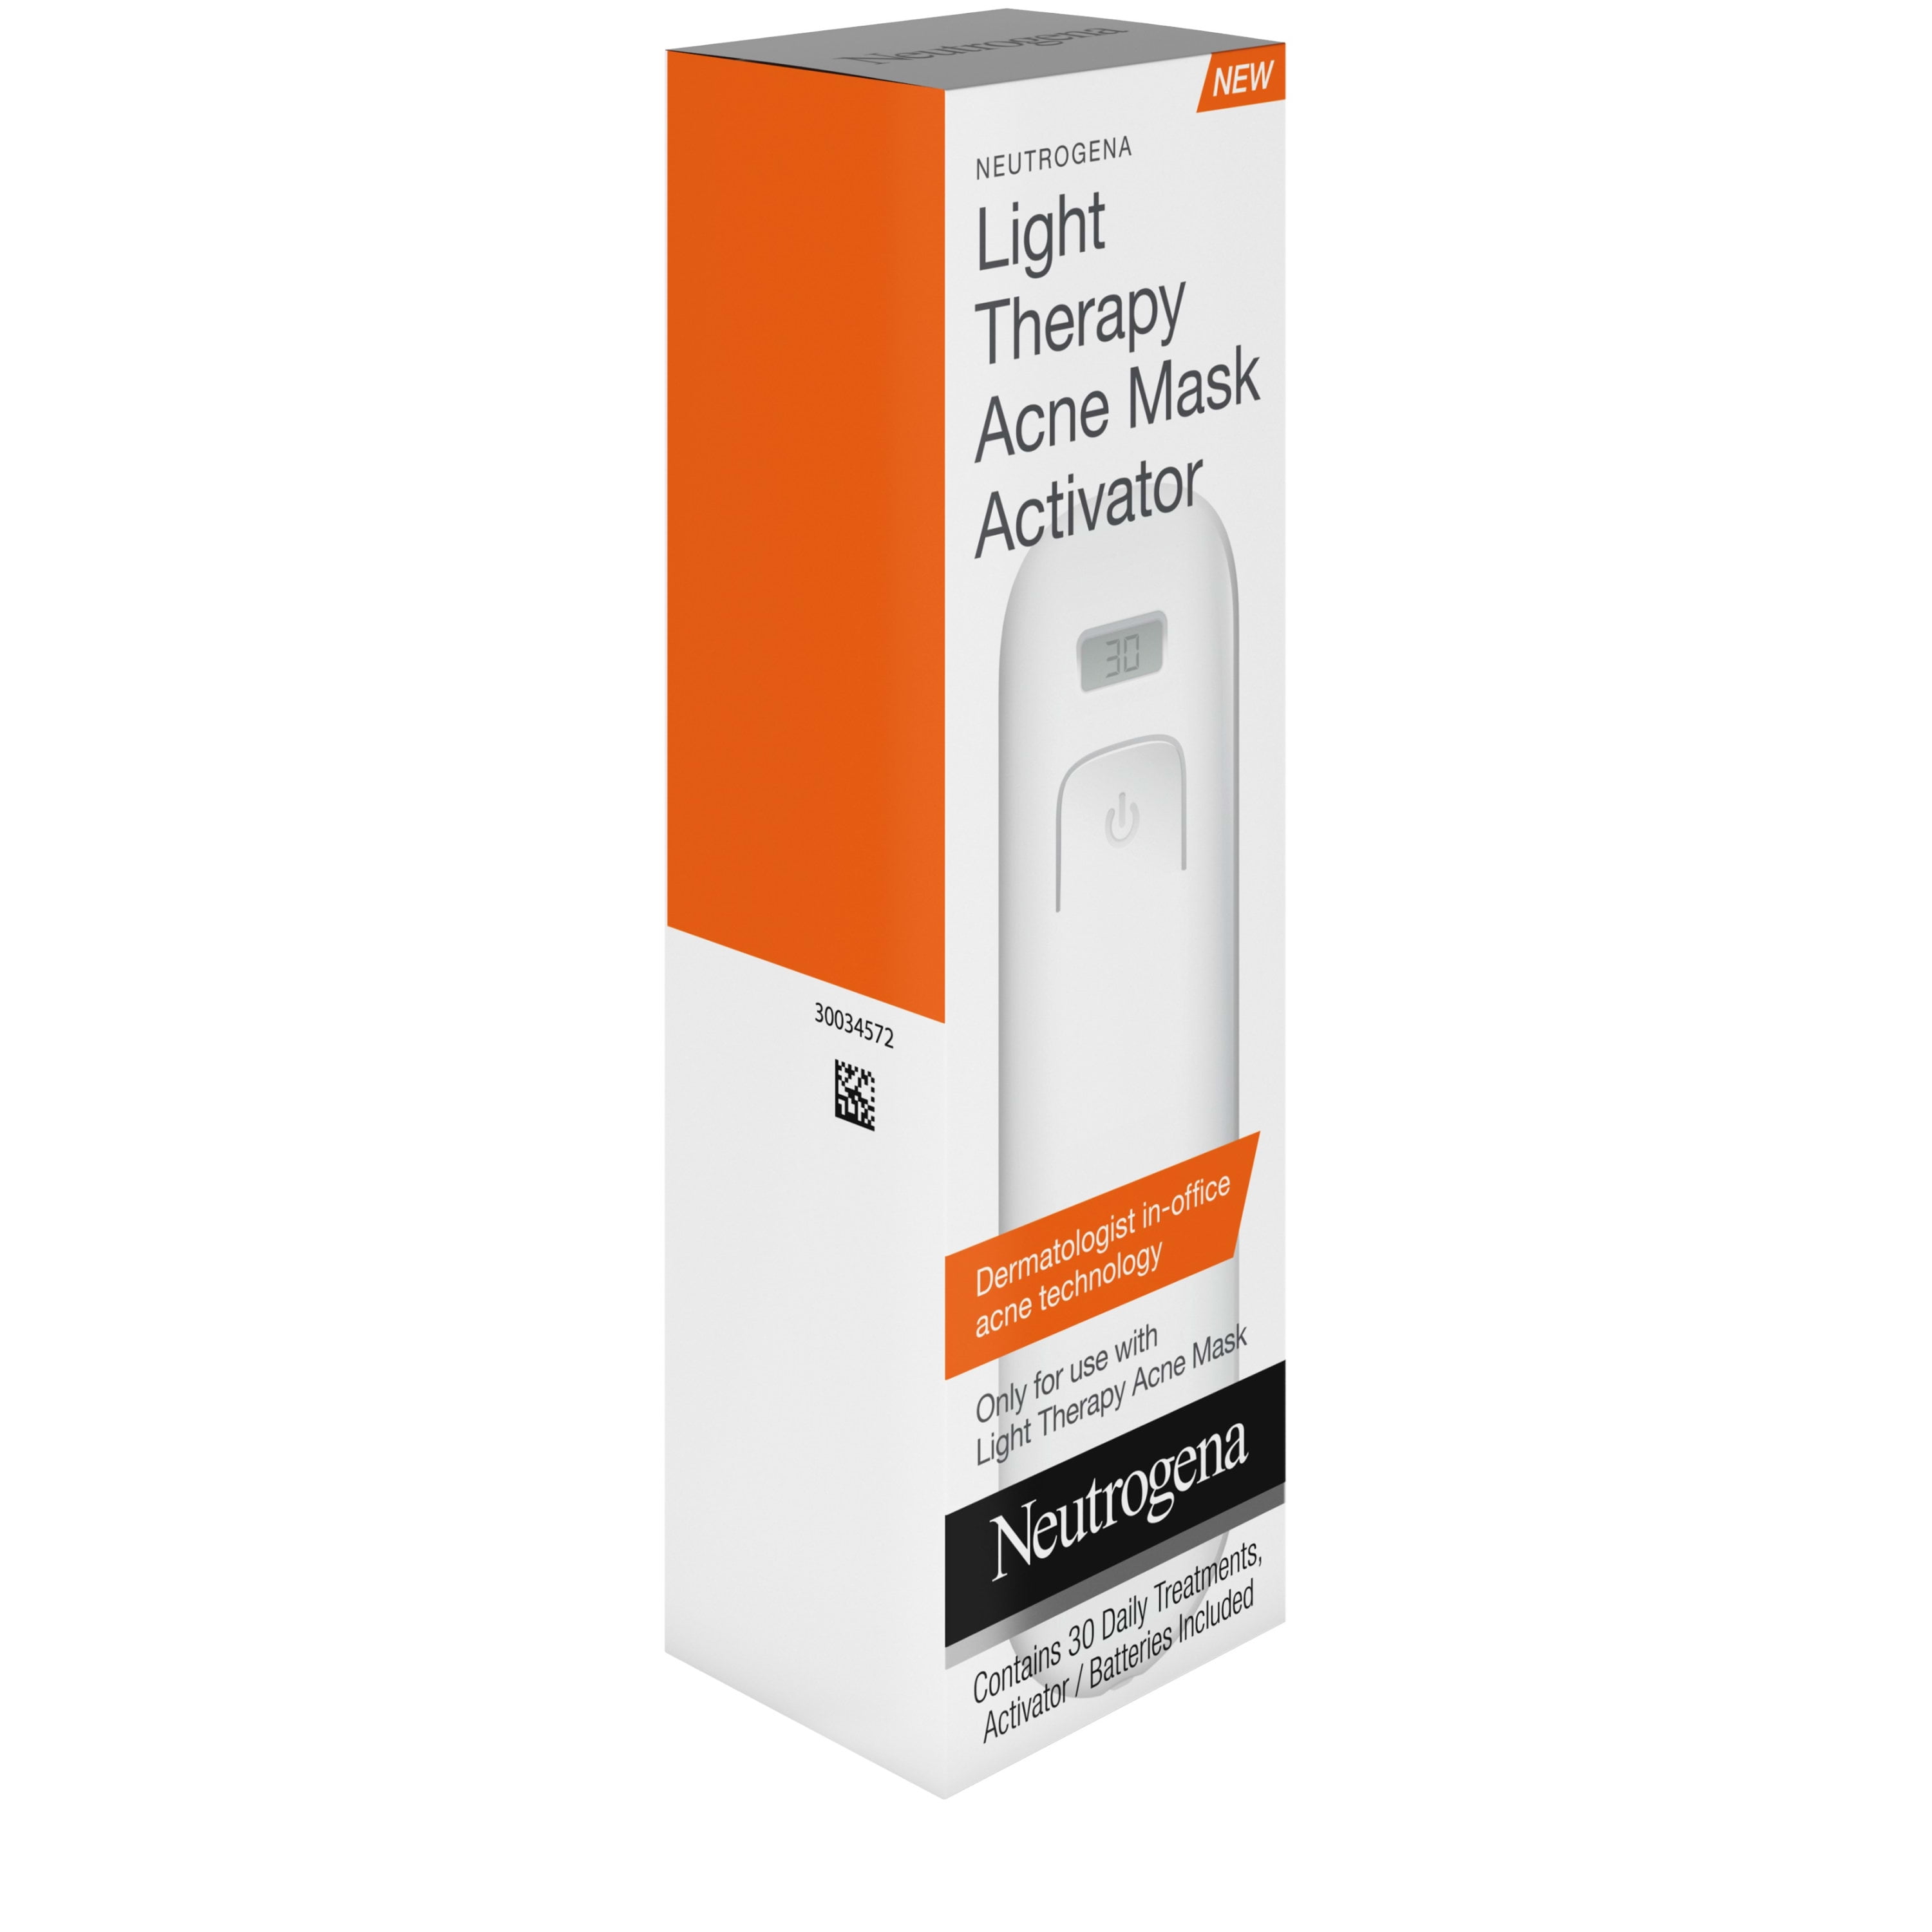 Neutrogena Blue & Red Light Acne Light Therapy Mask Activator, 1 Item -